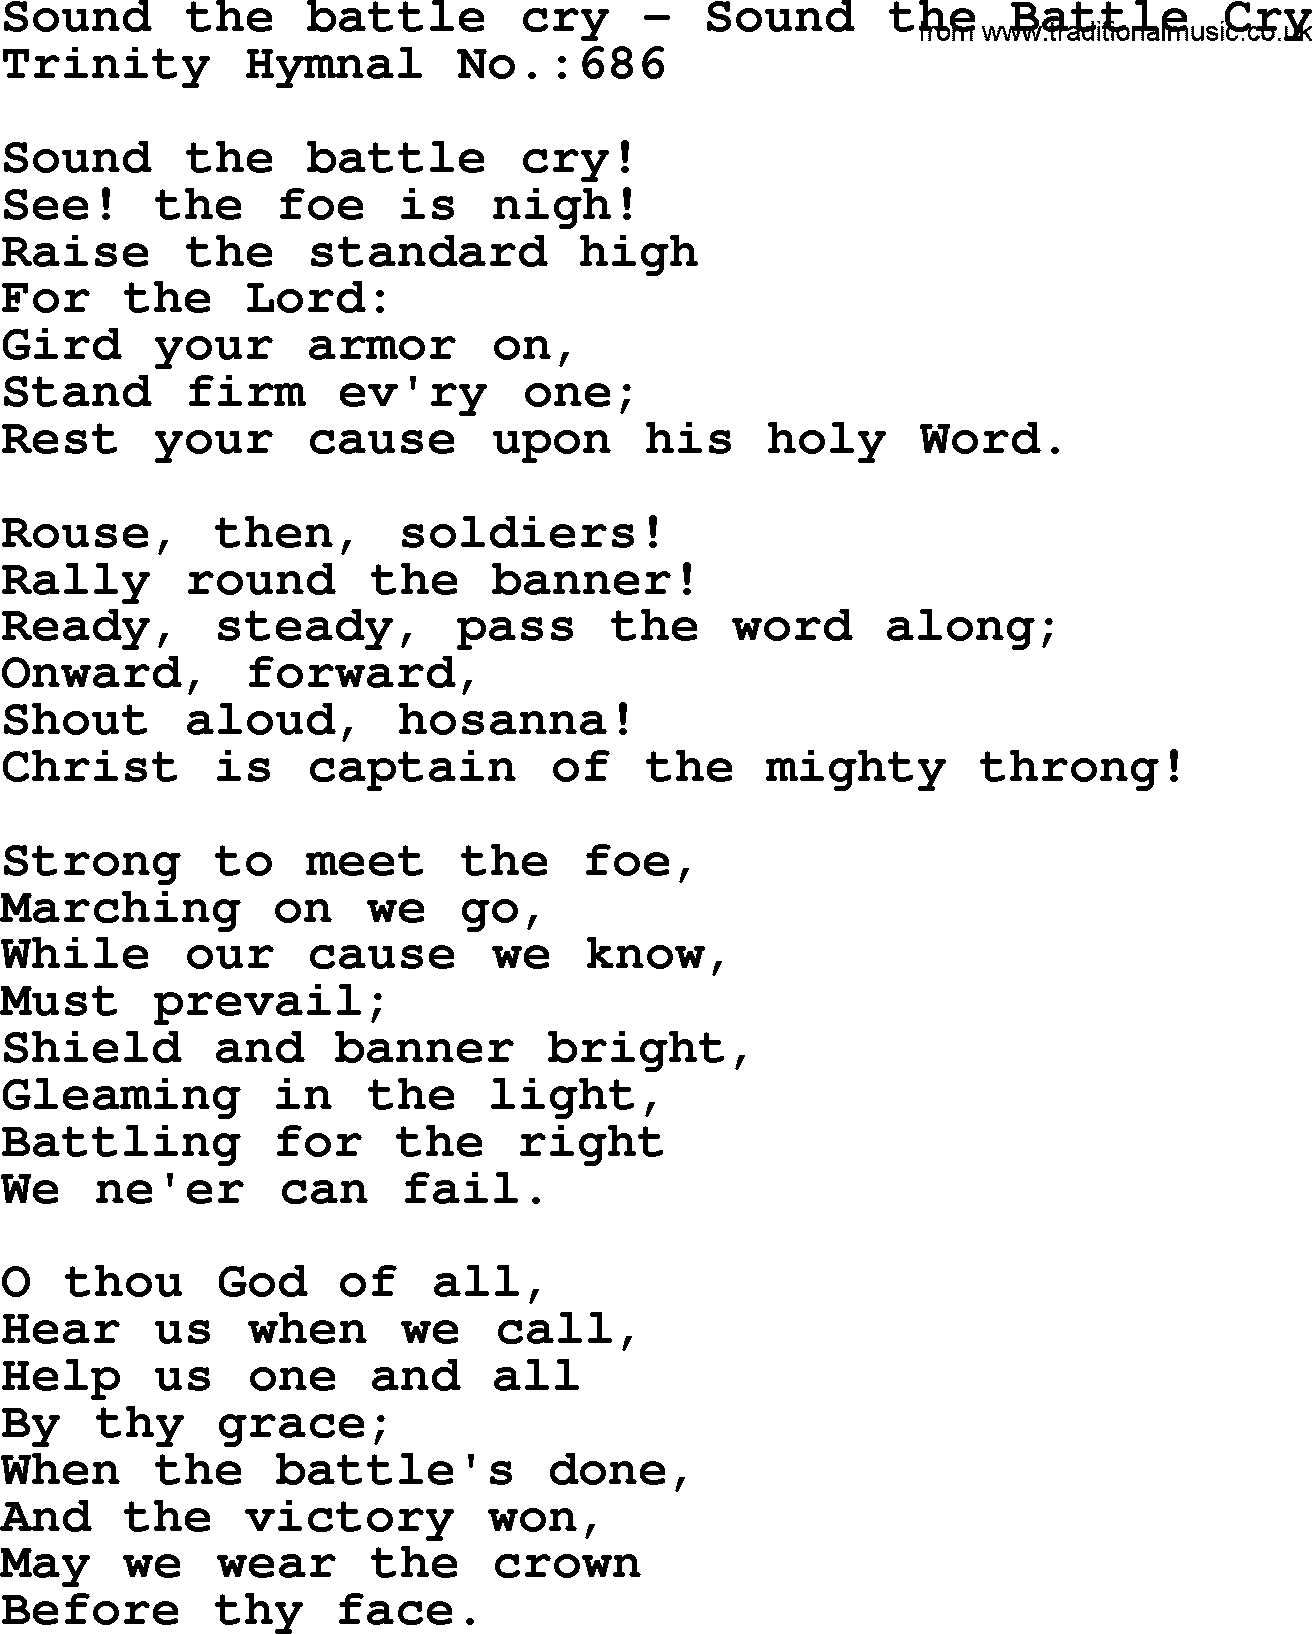 Trinity Hymnal Hymn: Sound The Battle Cry--Sound The Battle Cry, lyrics with midi music